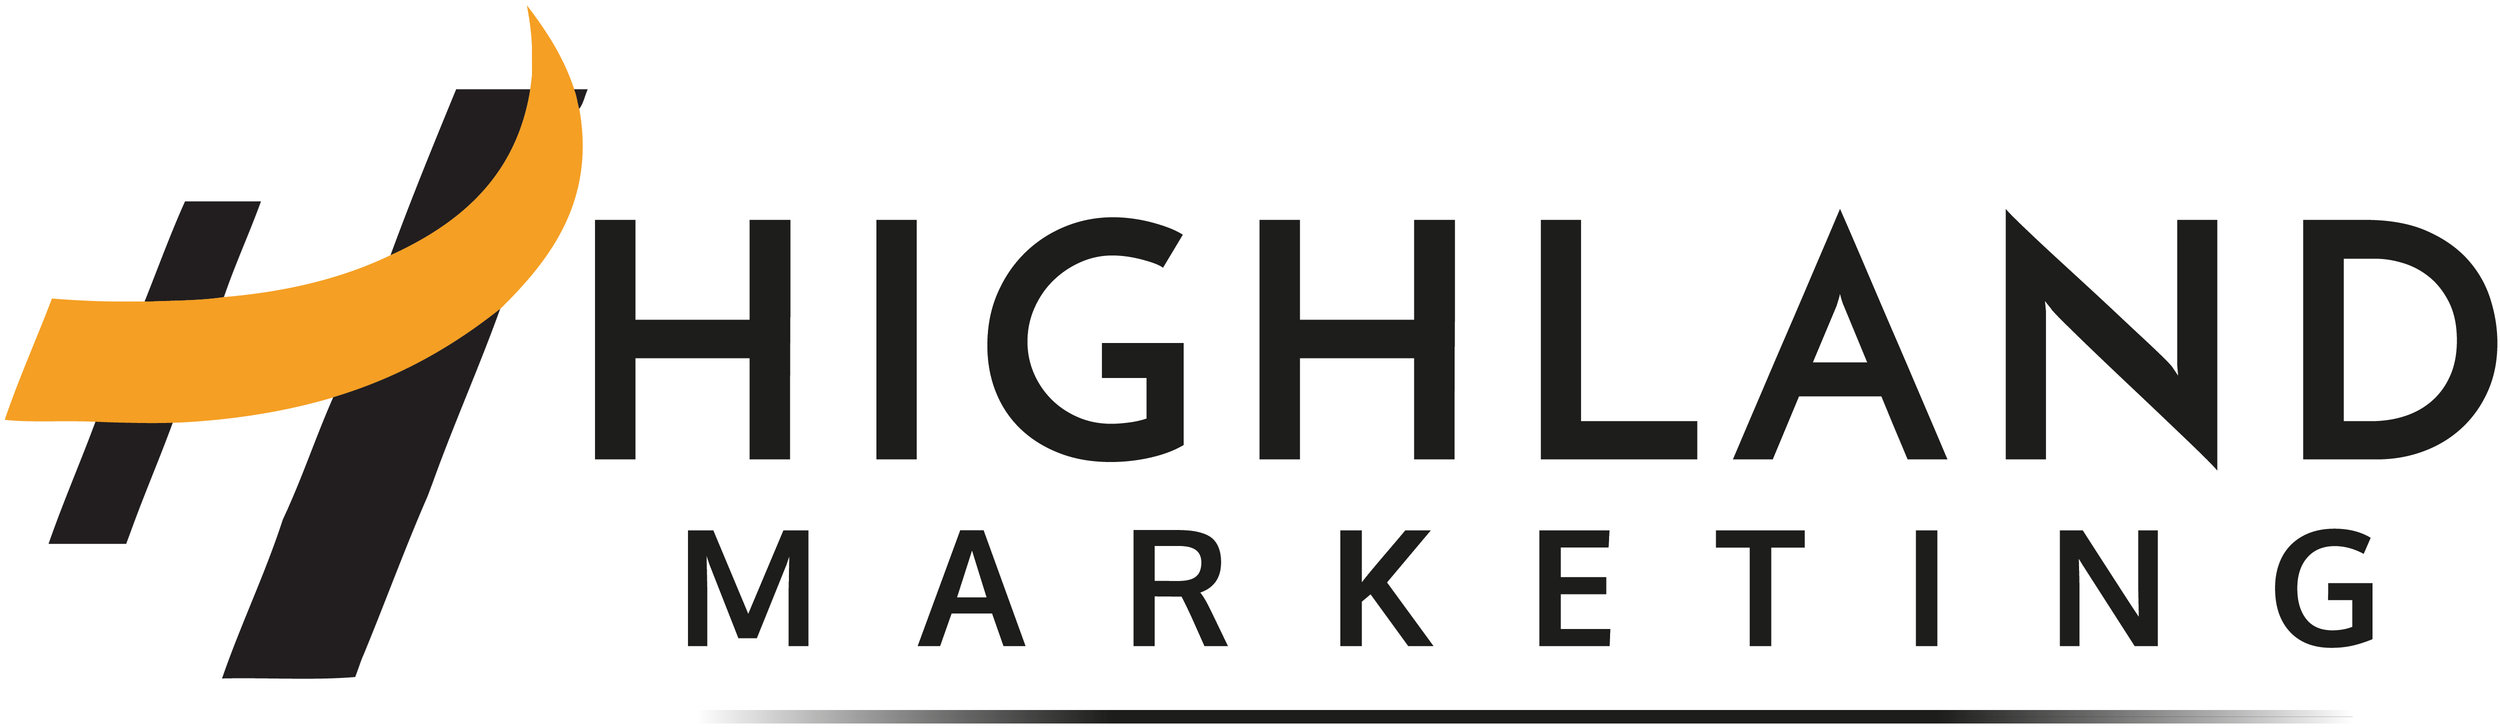 Highland-Marketing-Logo-2015 (1).jpg